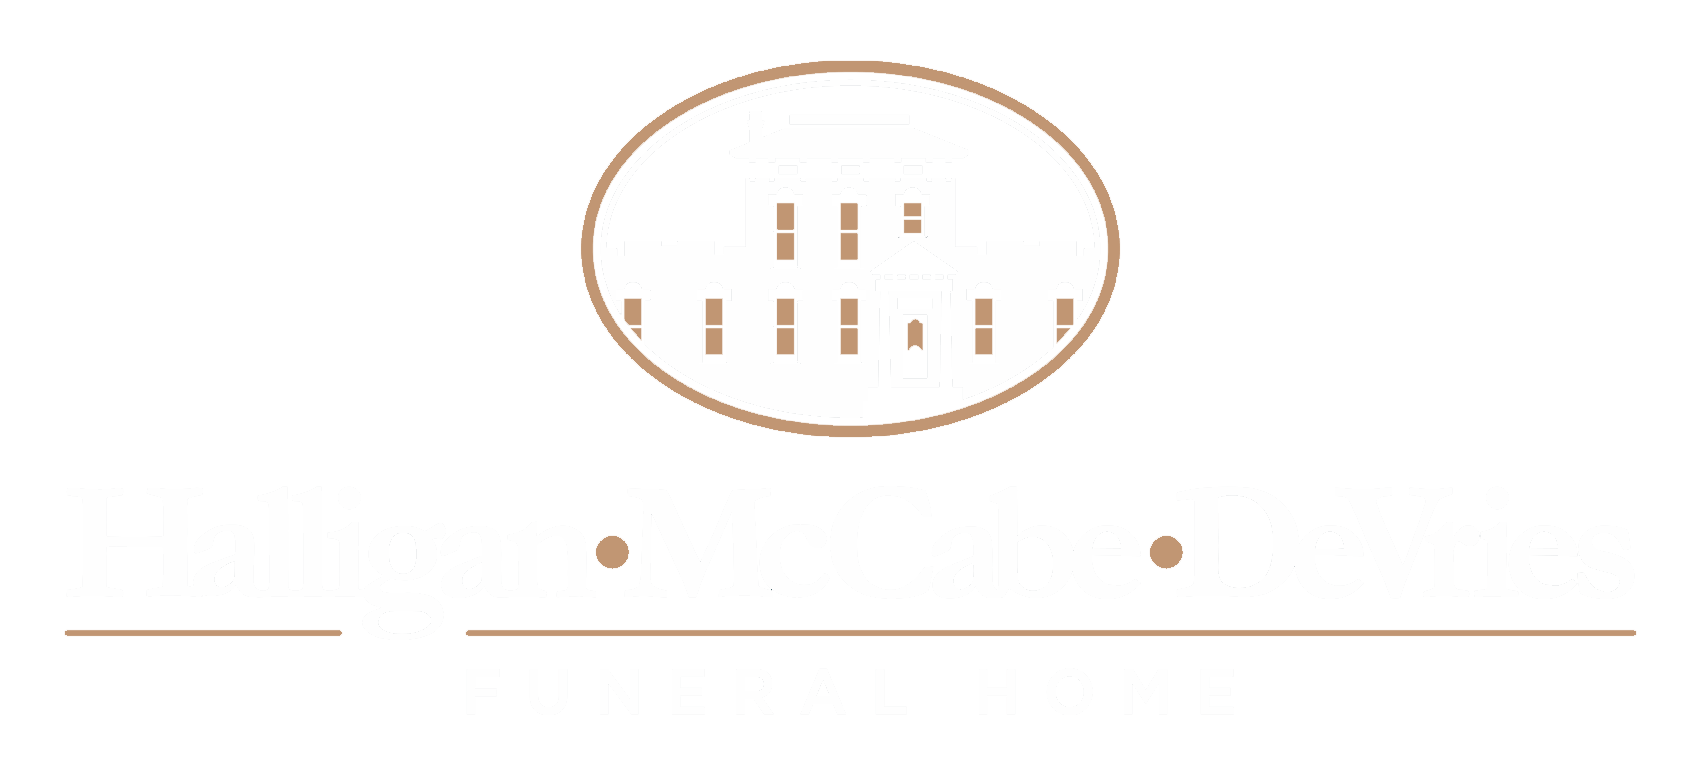 Halligan-McCabe-DeVries Funeral Home Logo